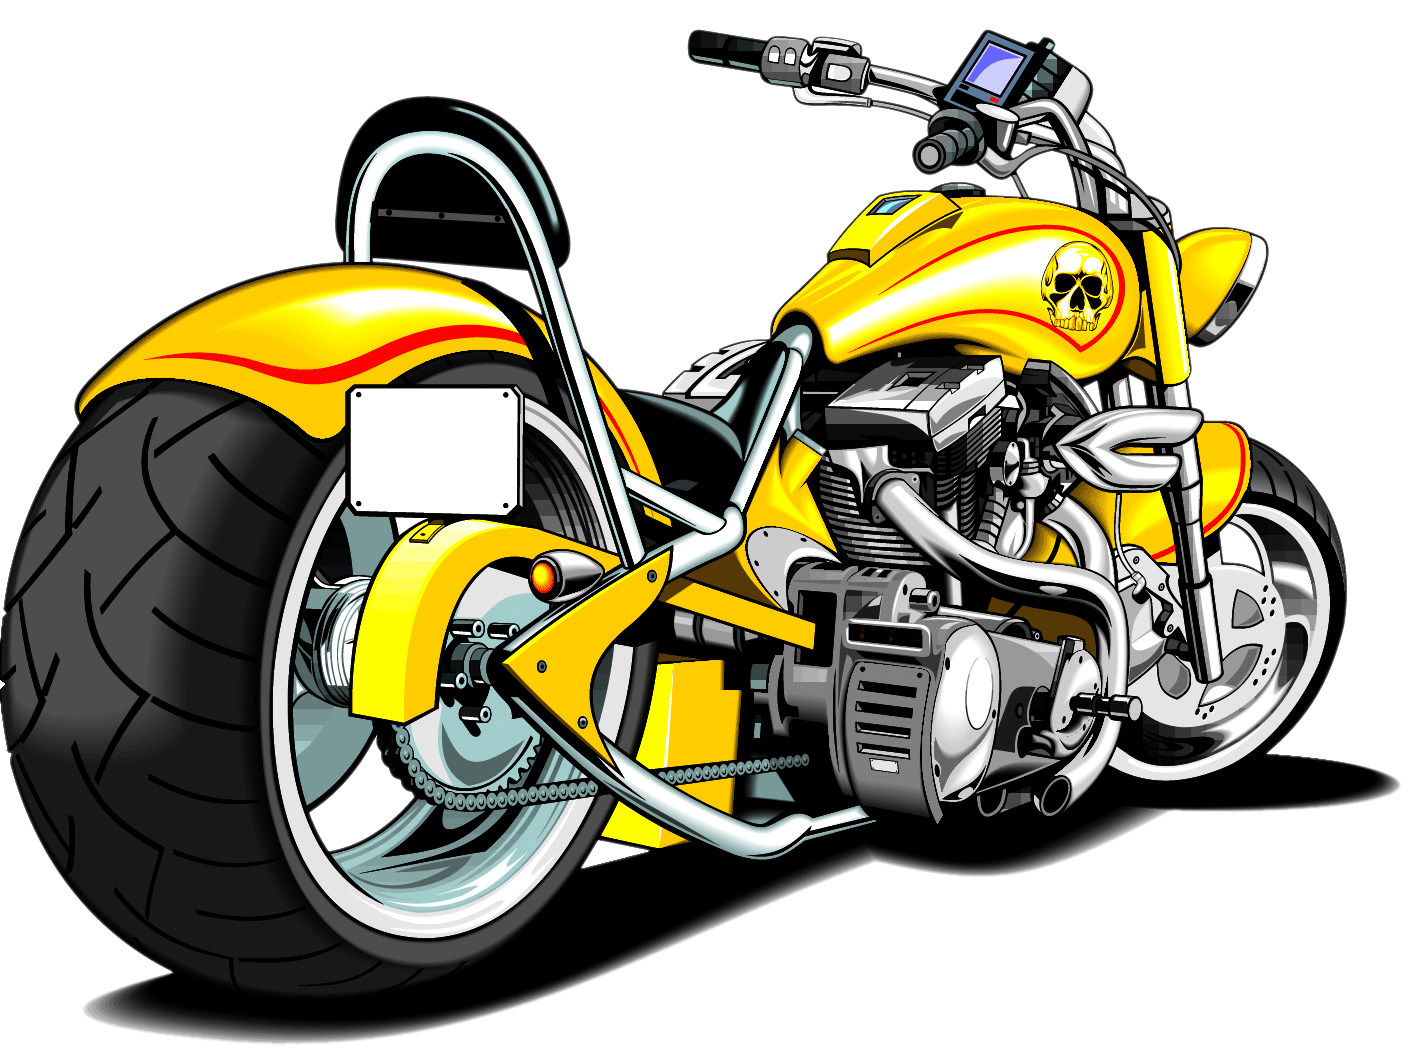 Mô tô Harley-Davidson